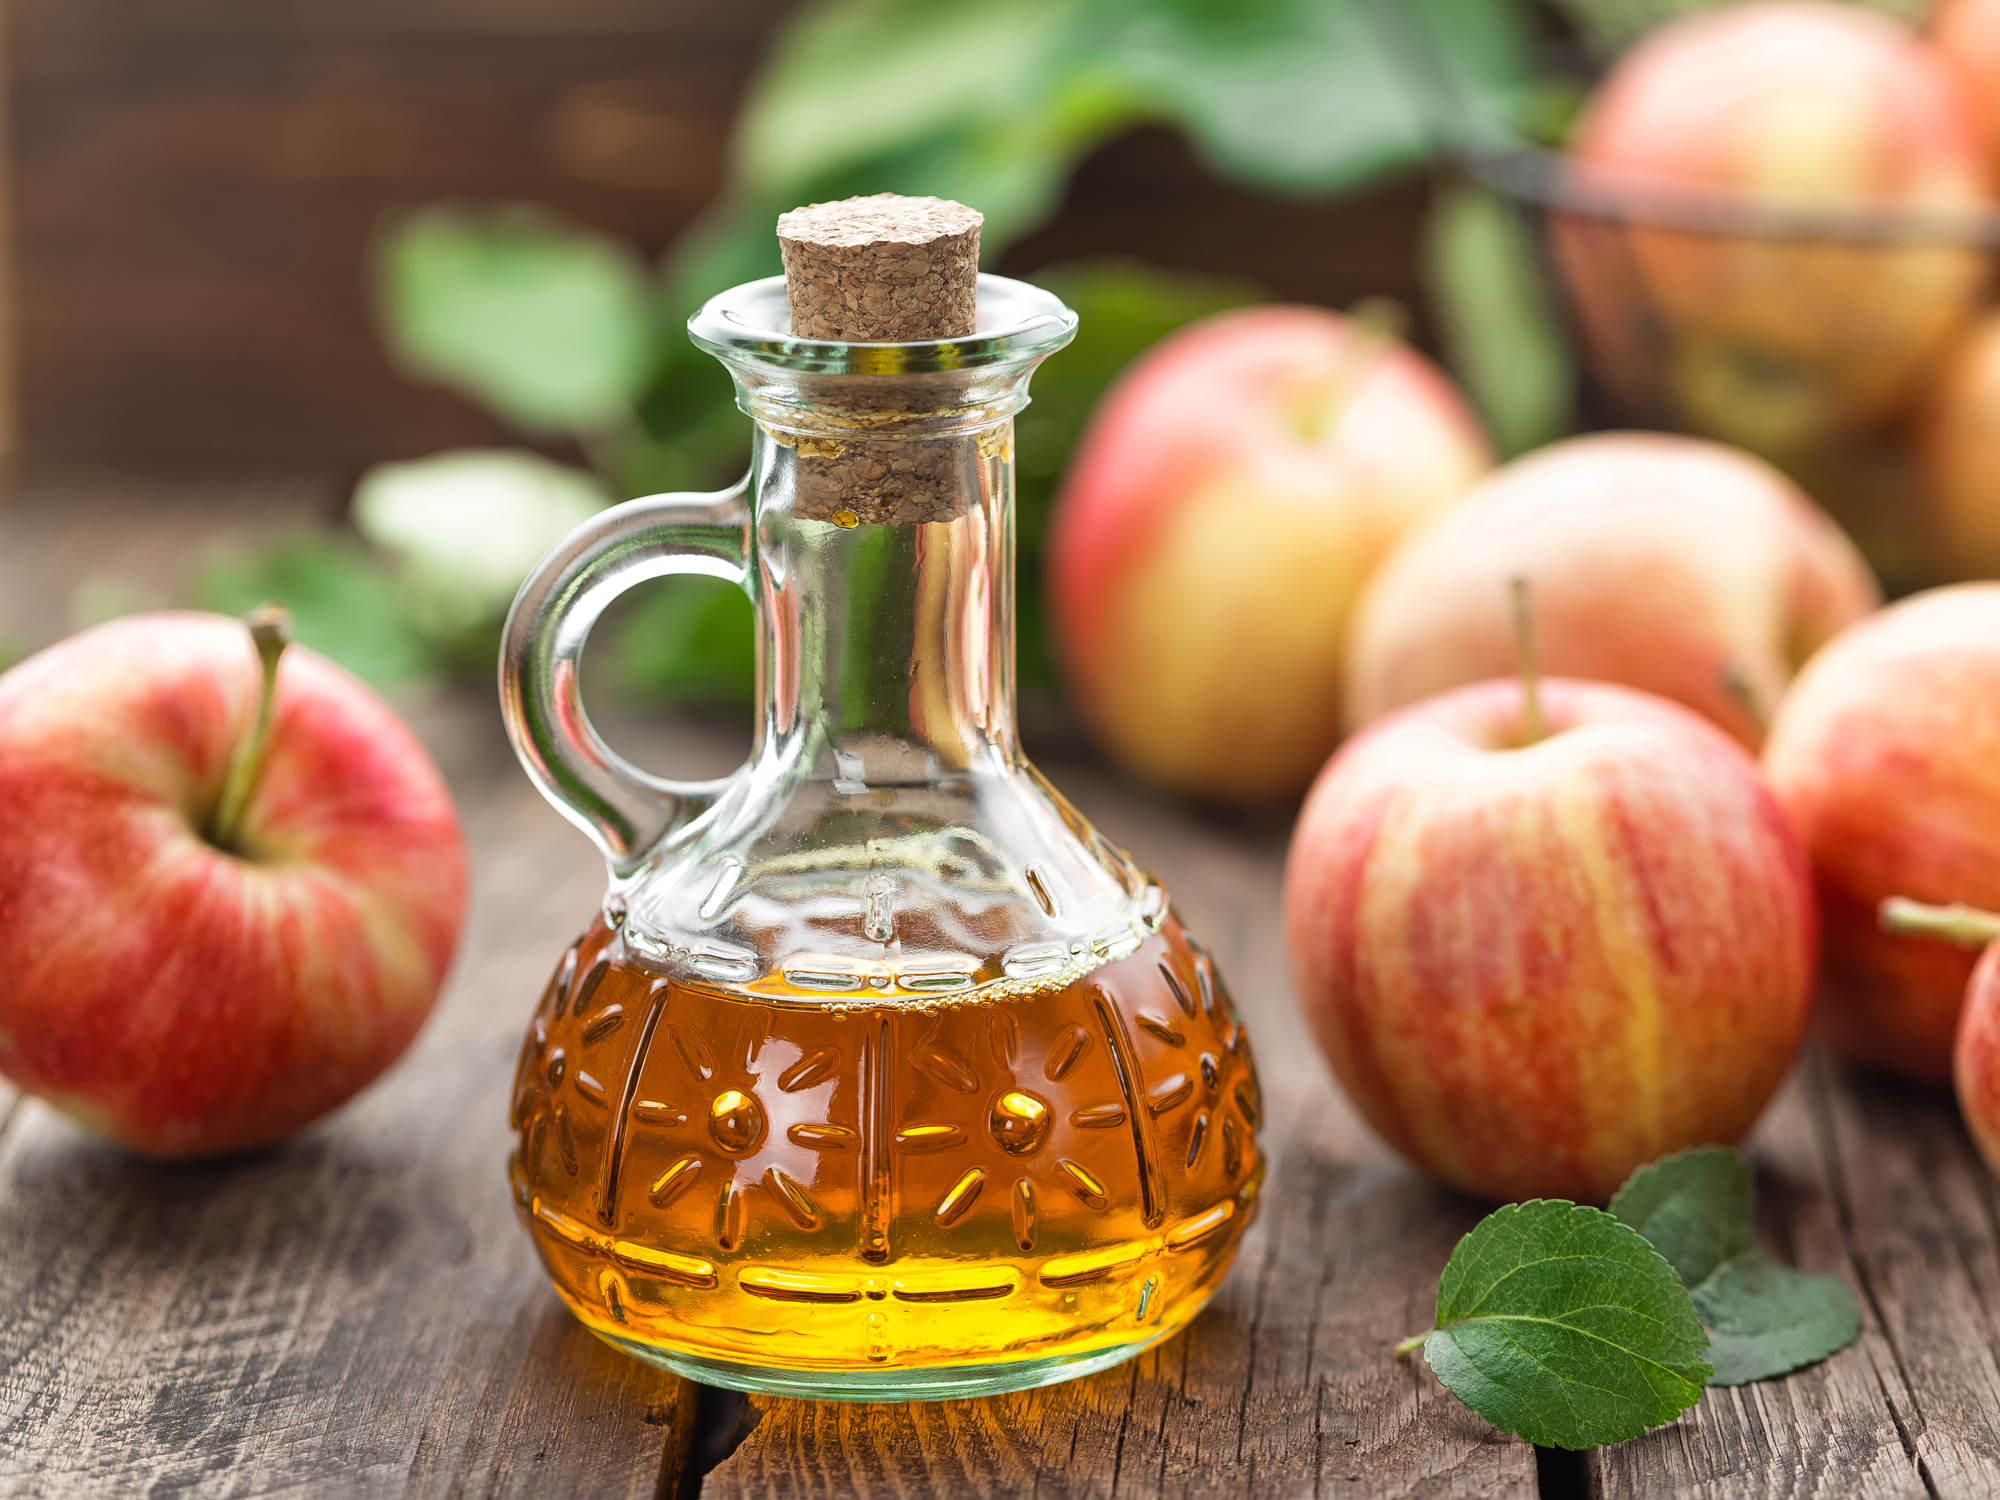 Apple cider vinegar: Old-fashioned remedy for a modern body